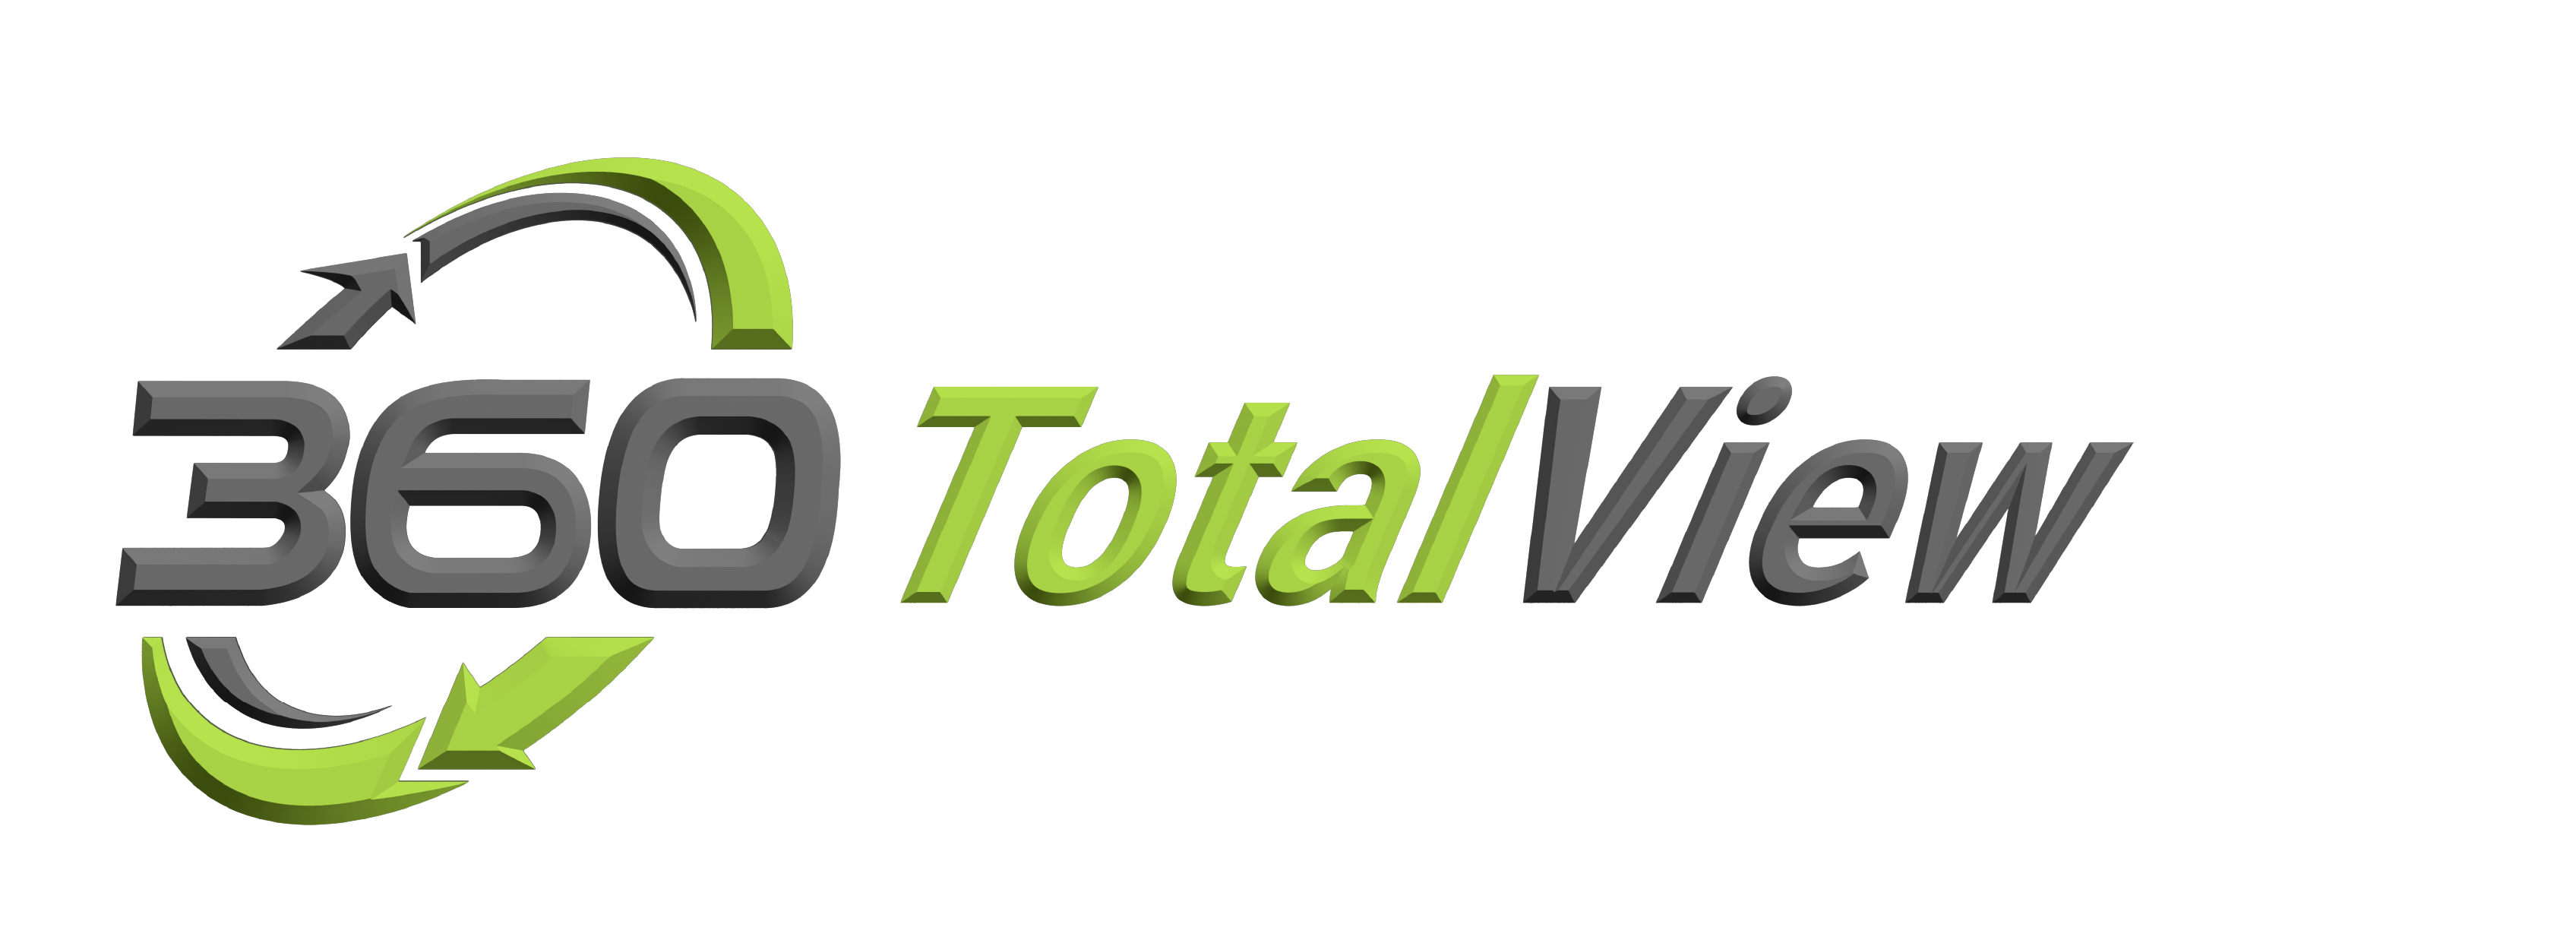 TotalView portal logo